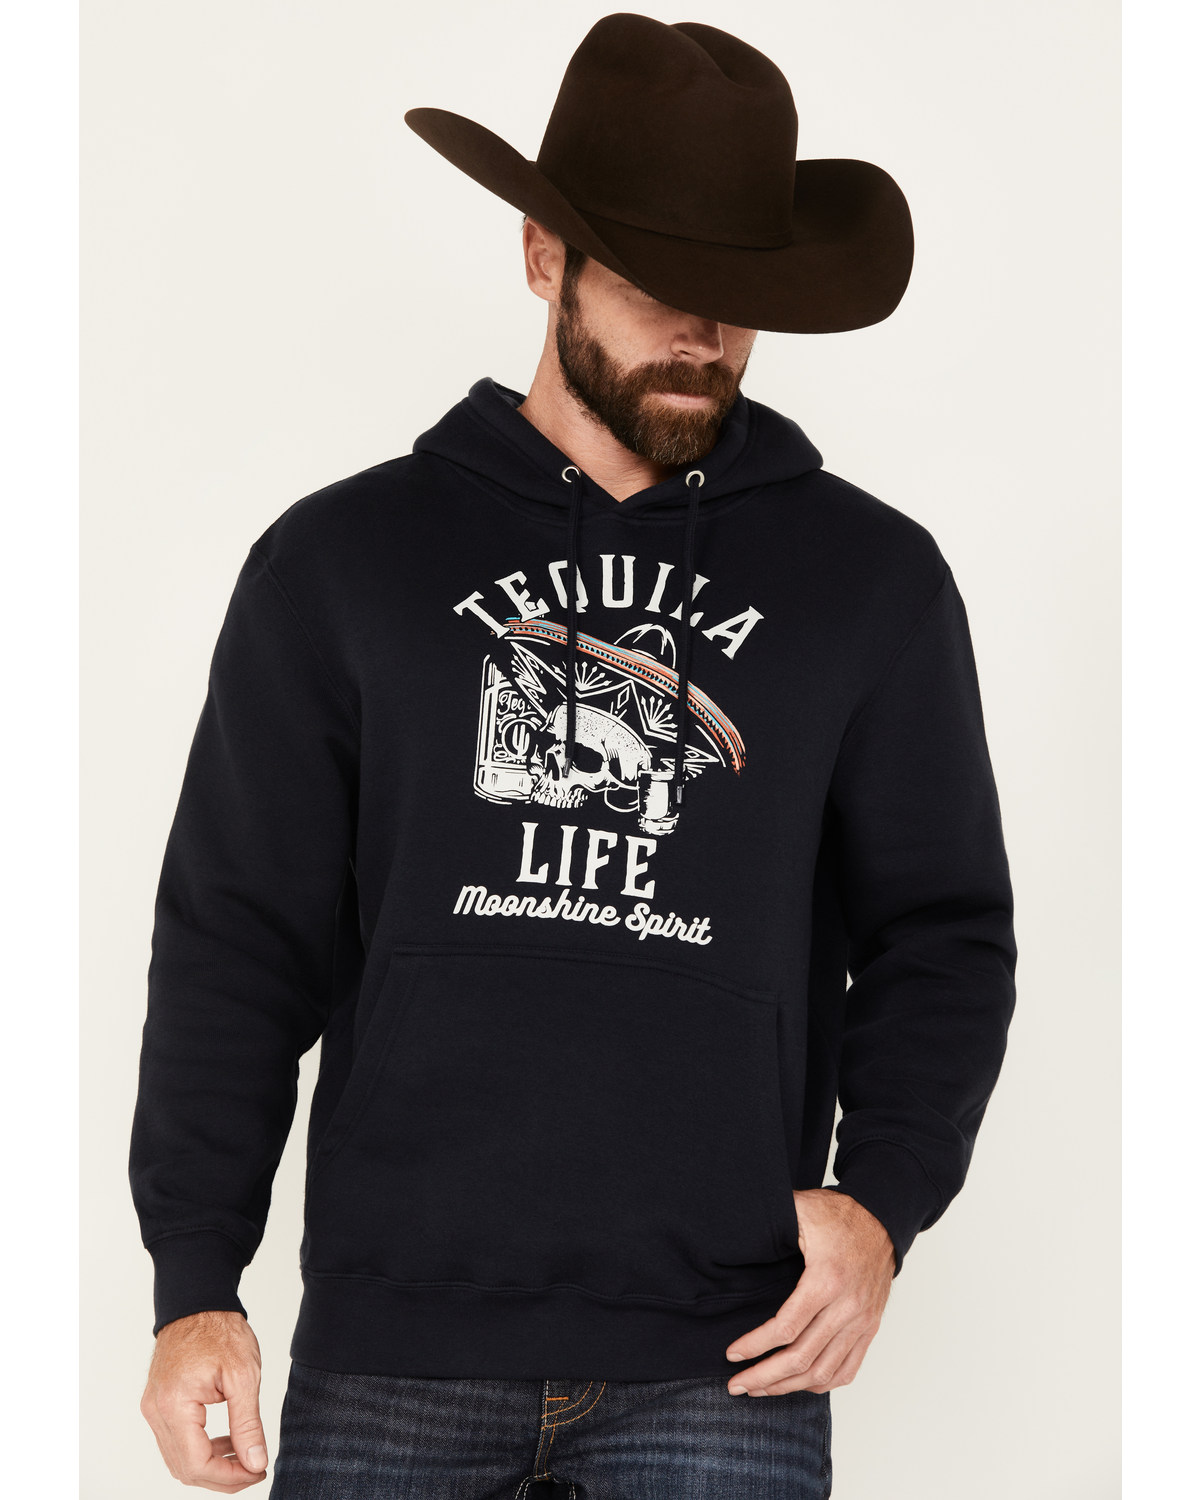 Moonshine Spirit Men's Tequila Life Hooded Sweatshirt